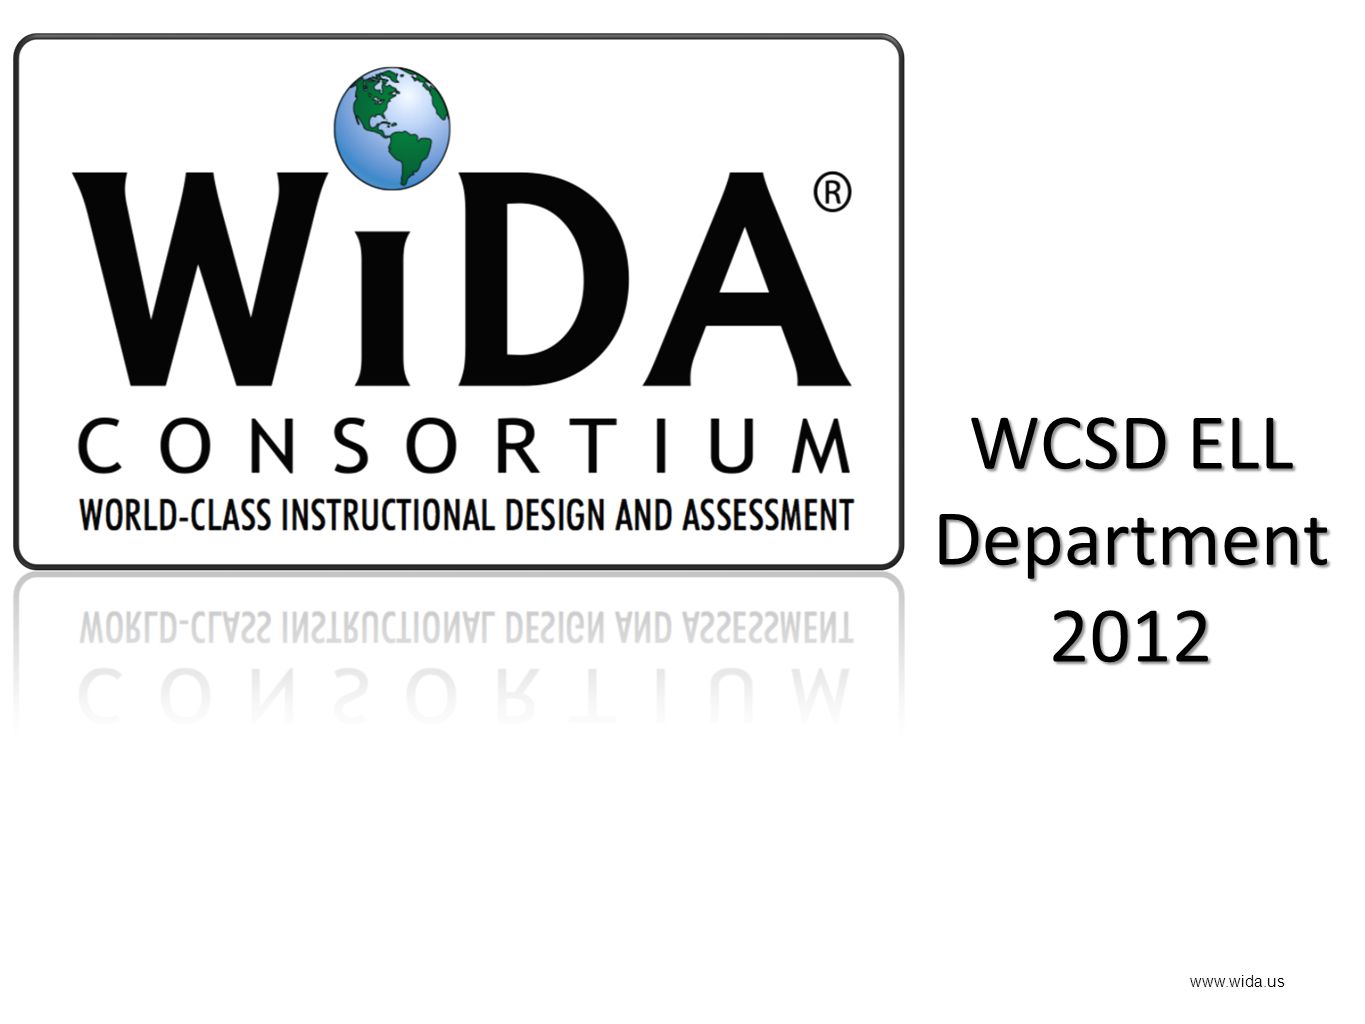 WCSD ELL Department